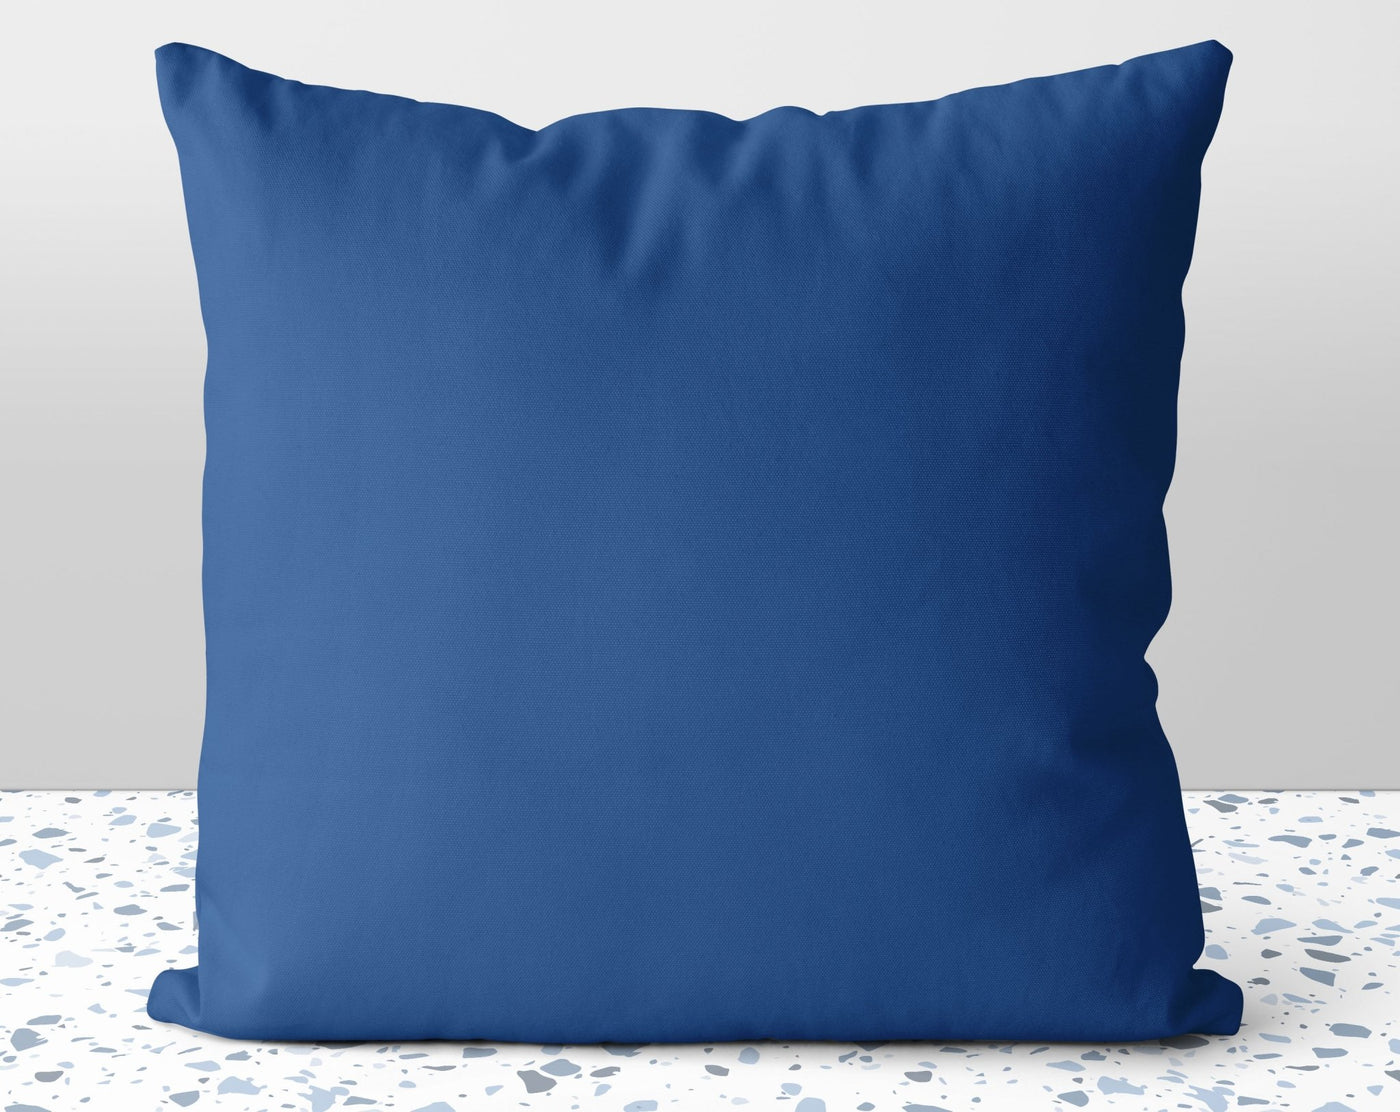 Blue Asian Crane Birds Pillow Throw Cover with Insert - Cush Potato Pillows